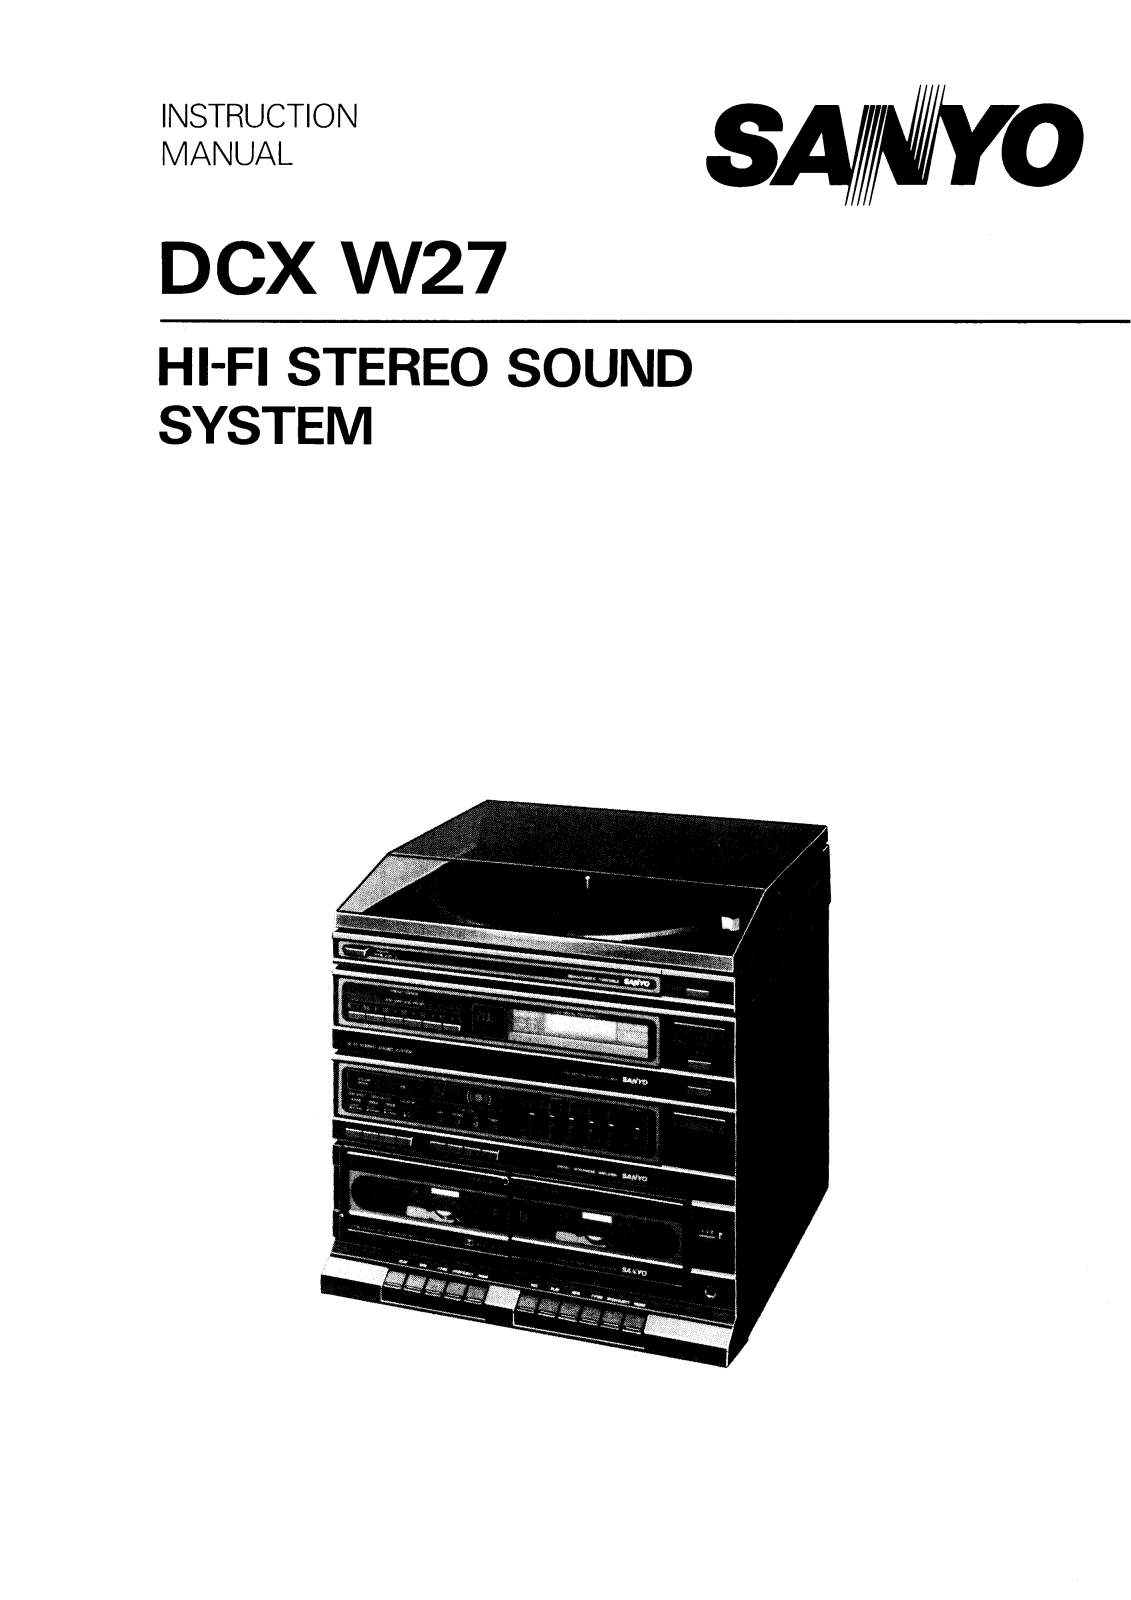 Sanyo DCX W27 Instruction Manual